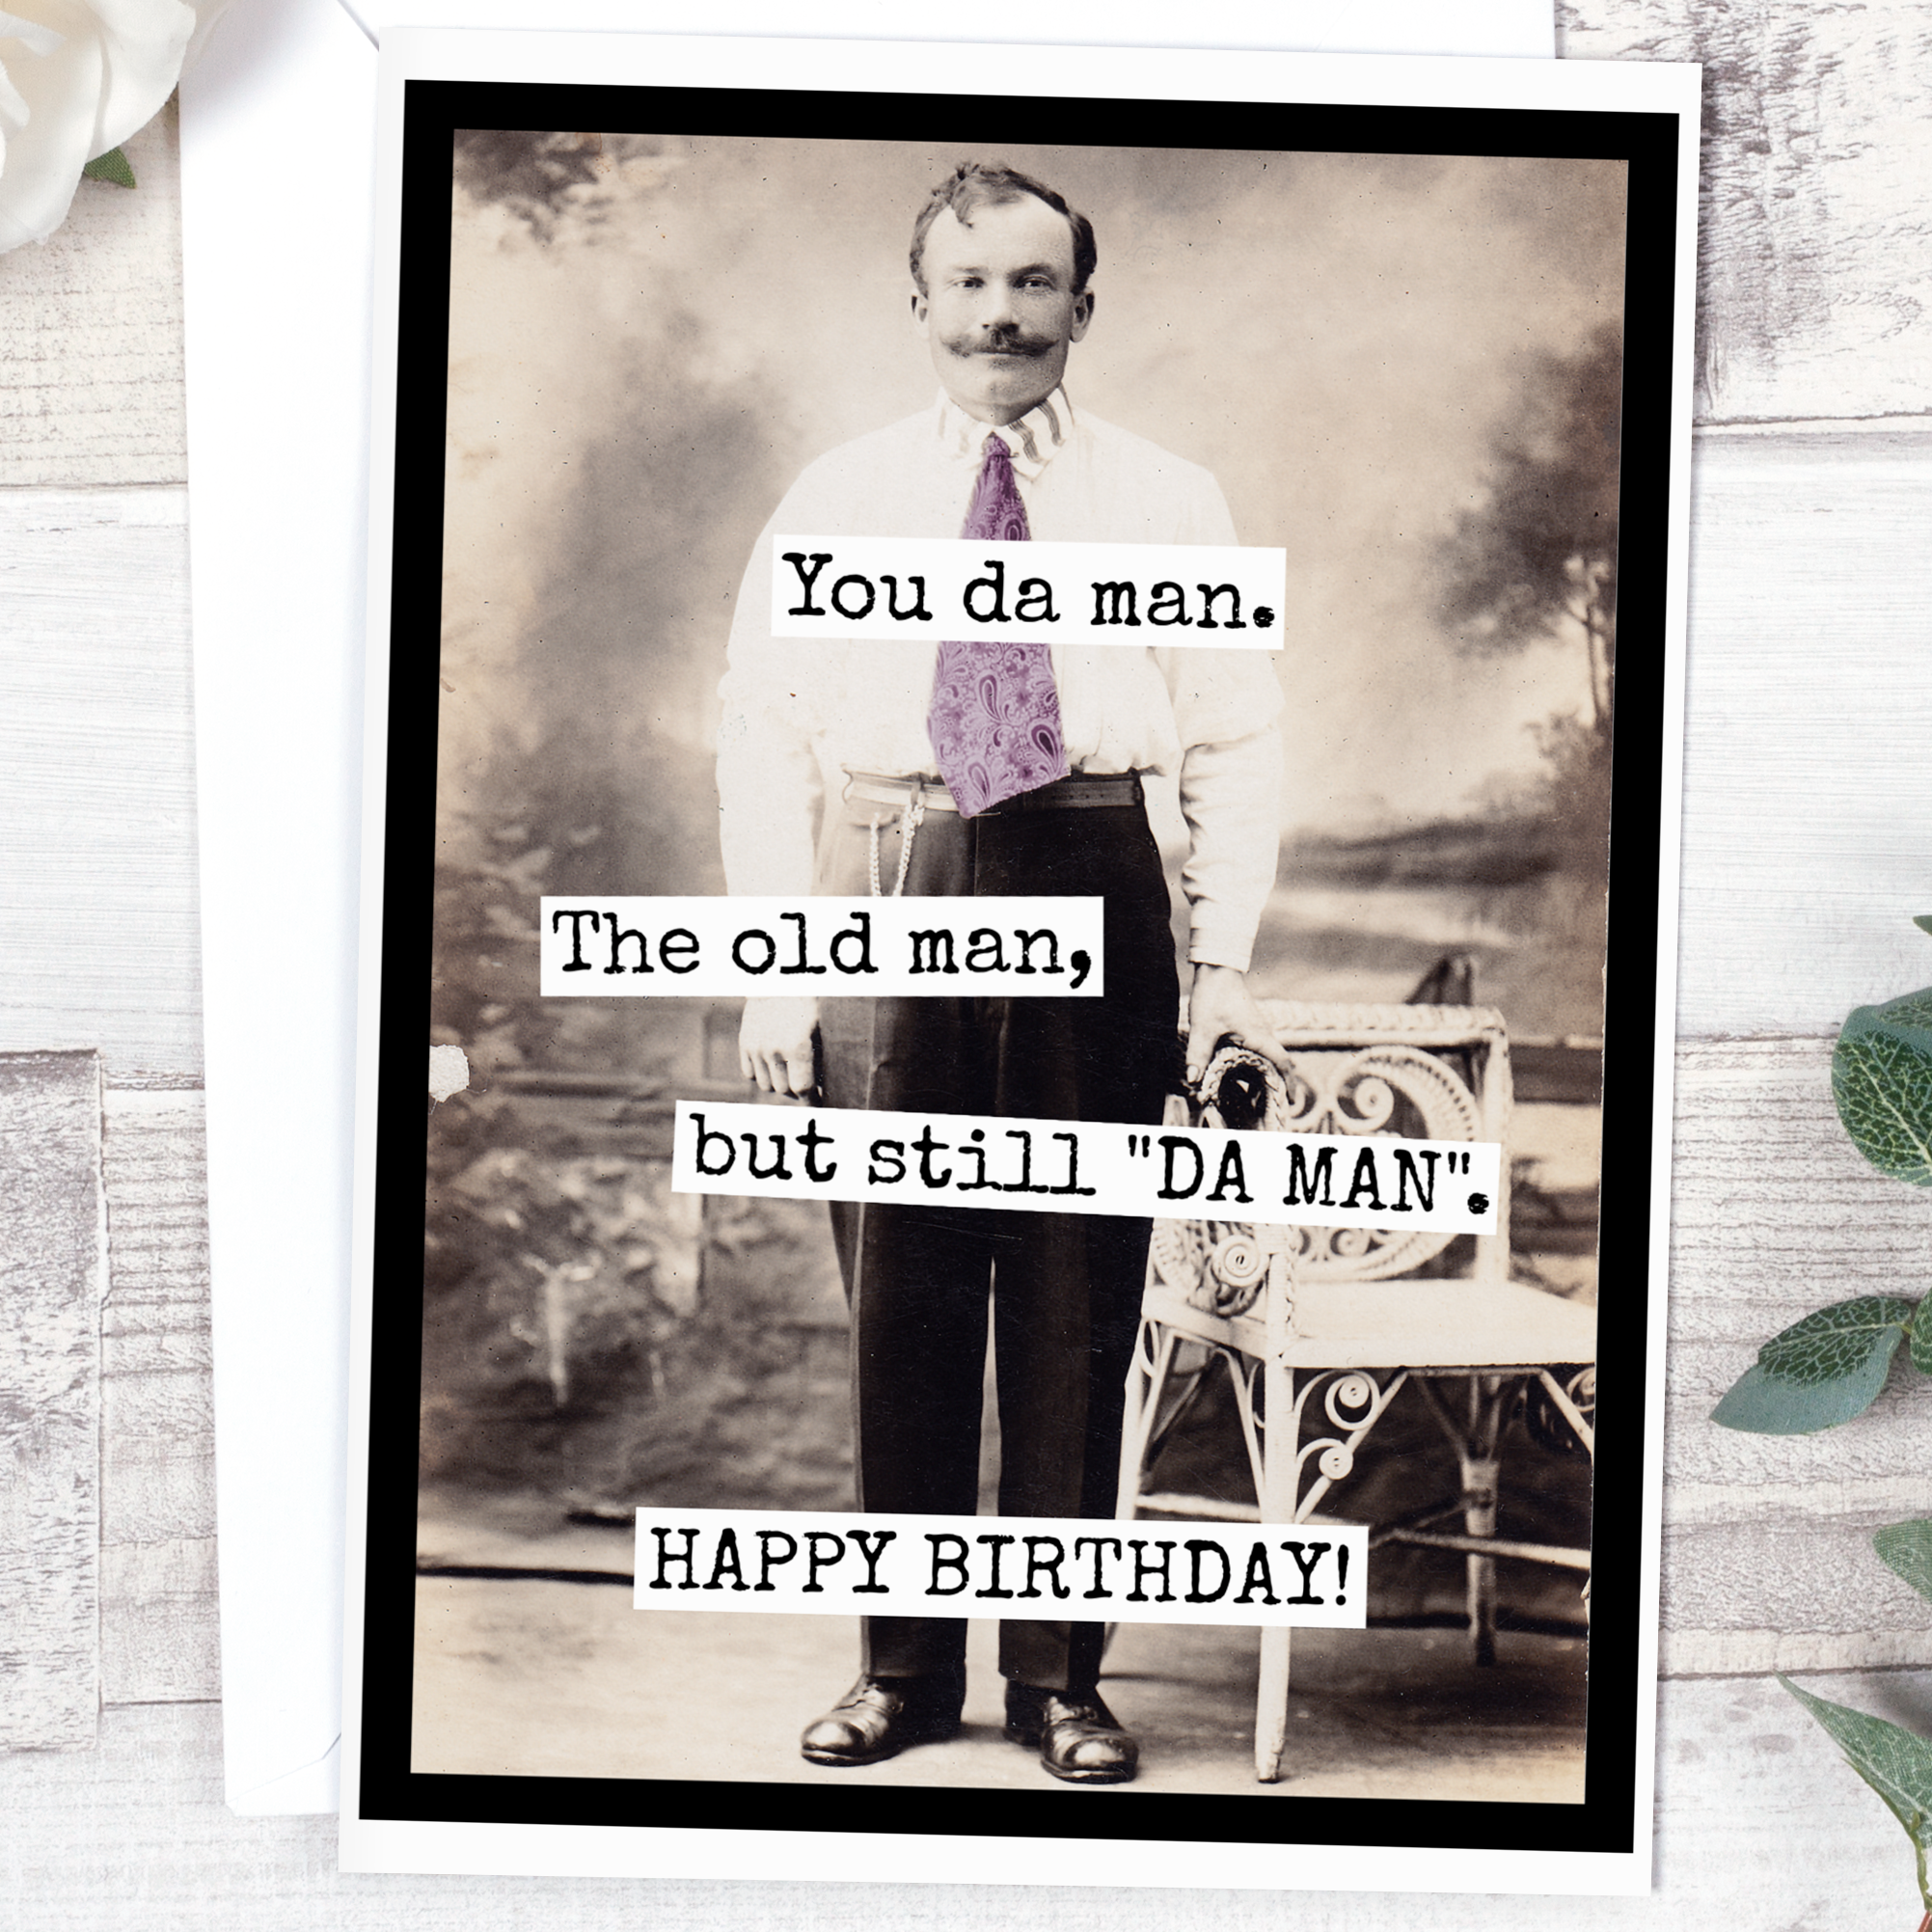 You Da Man. The Old Man, But Still "DA MAN". Happy Birthday.